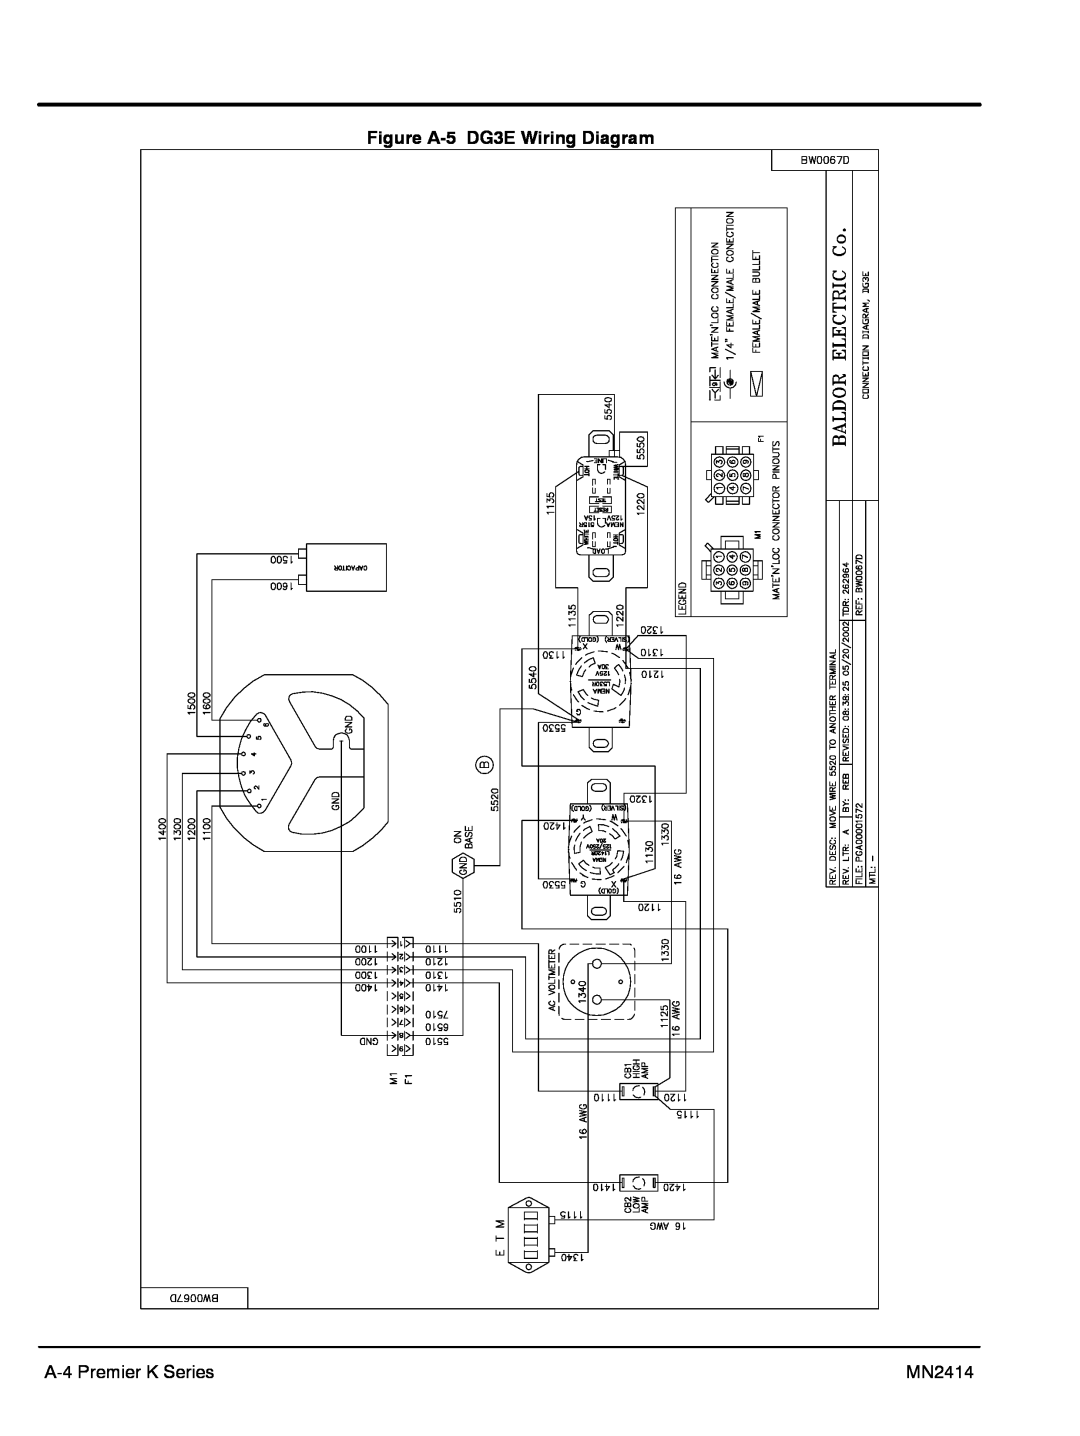 Baldor DG6E manual Figure A-5 DG3E Wiring Diagram, A-4 Premier K Series, MN2414 